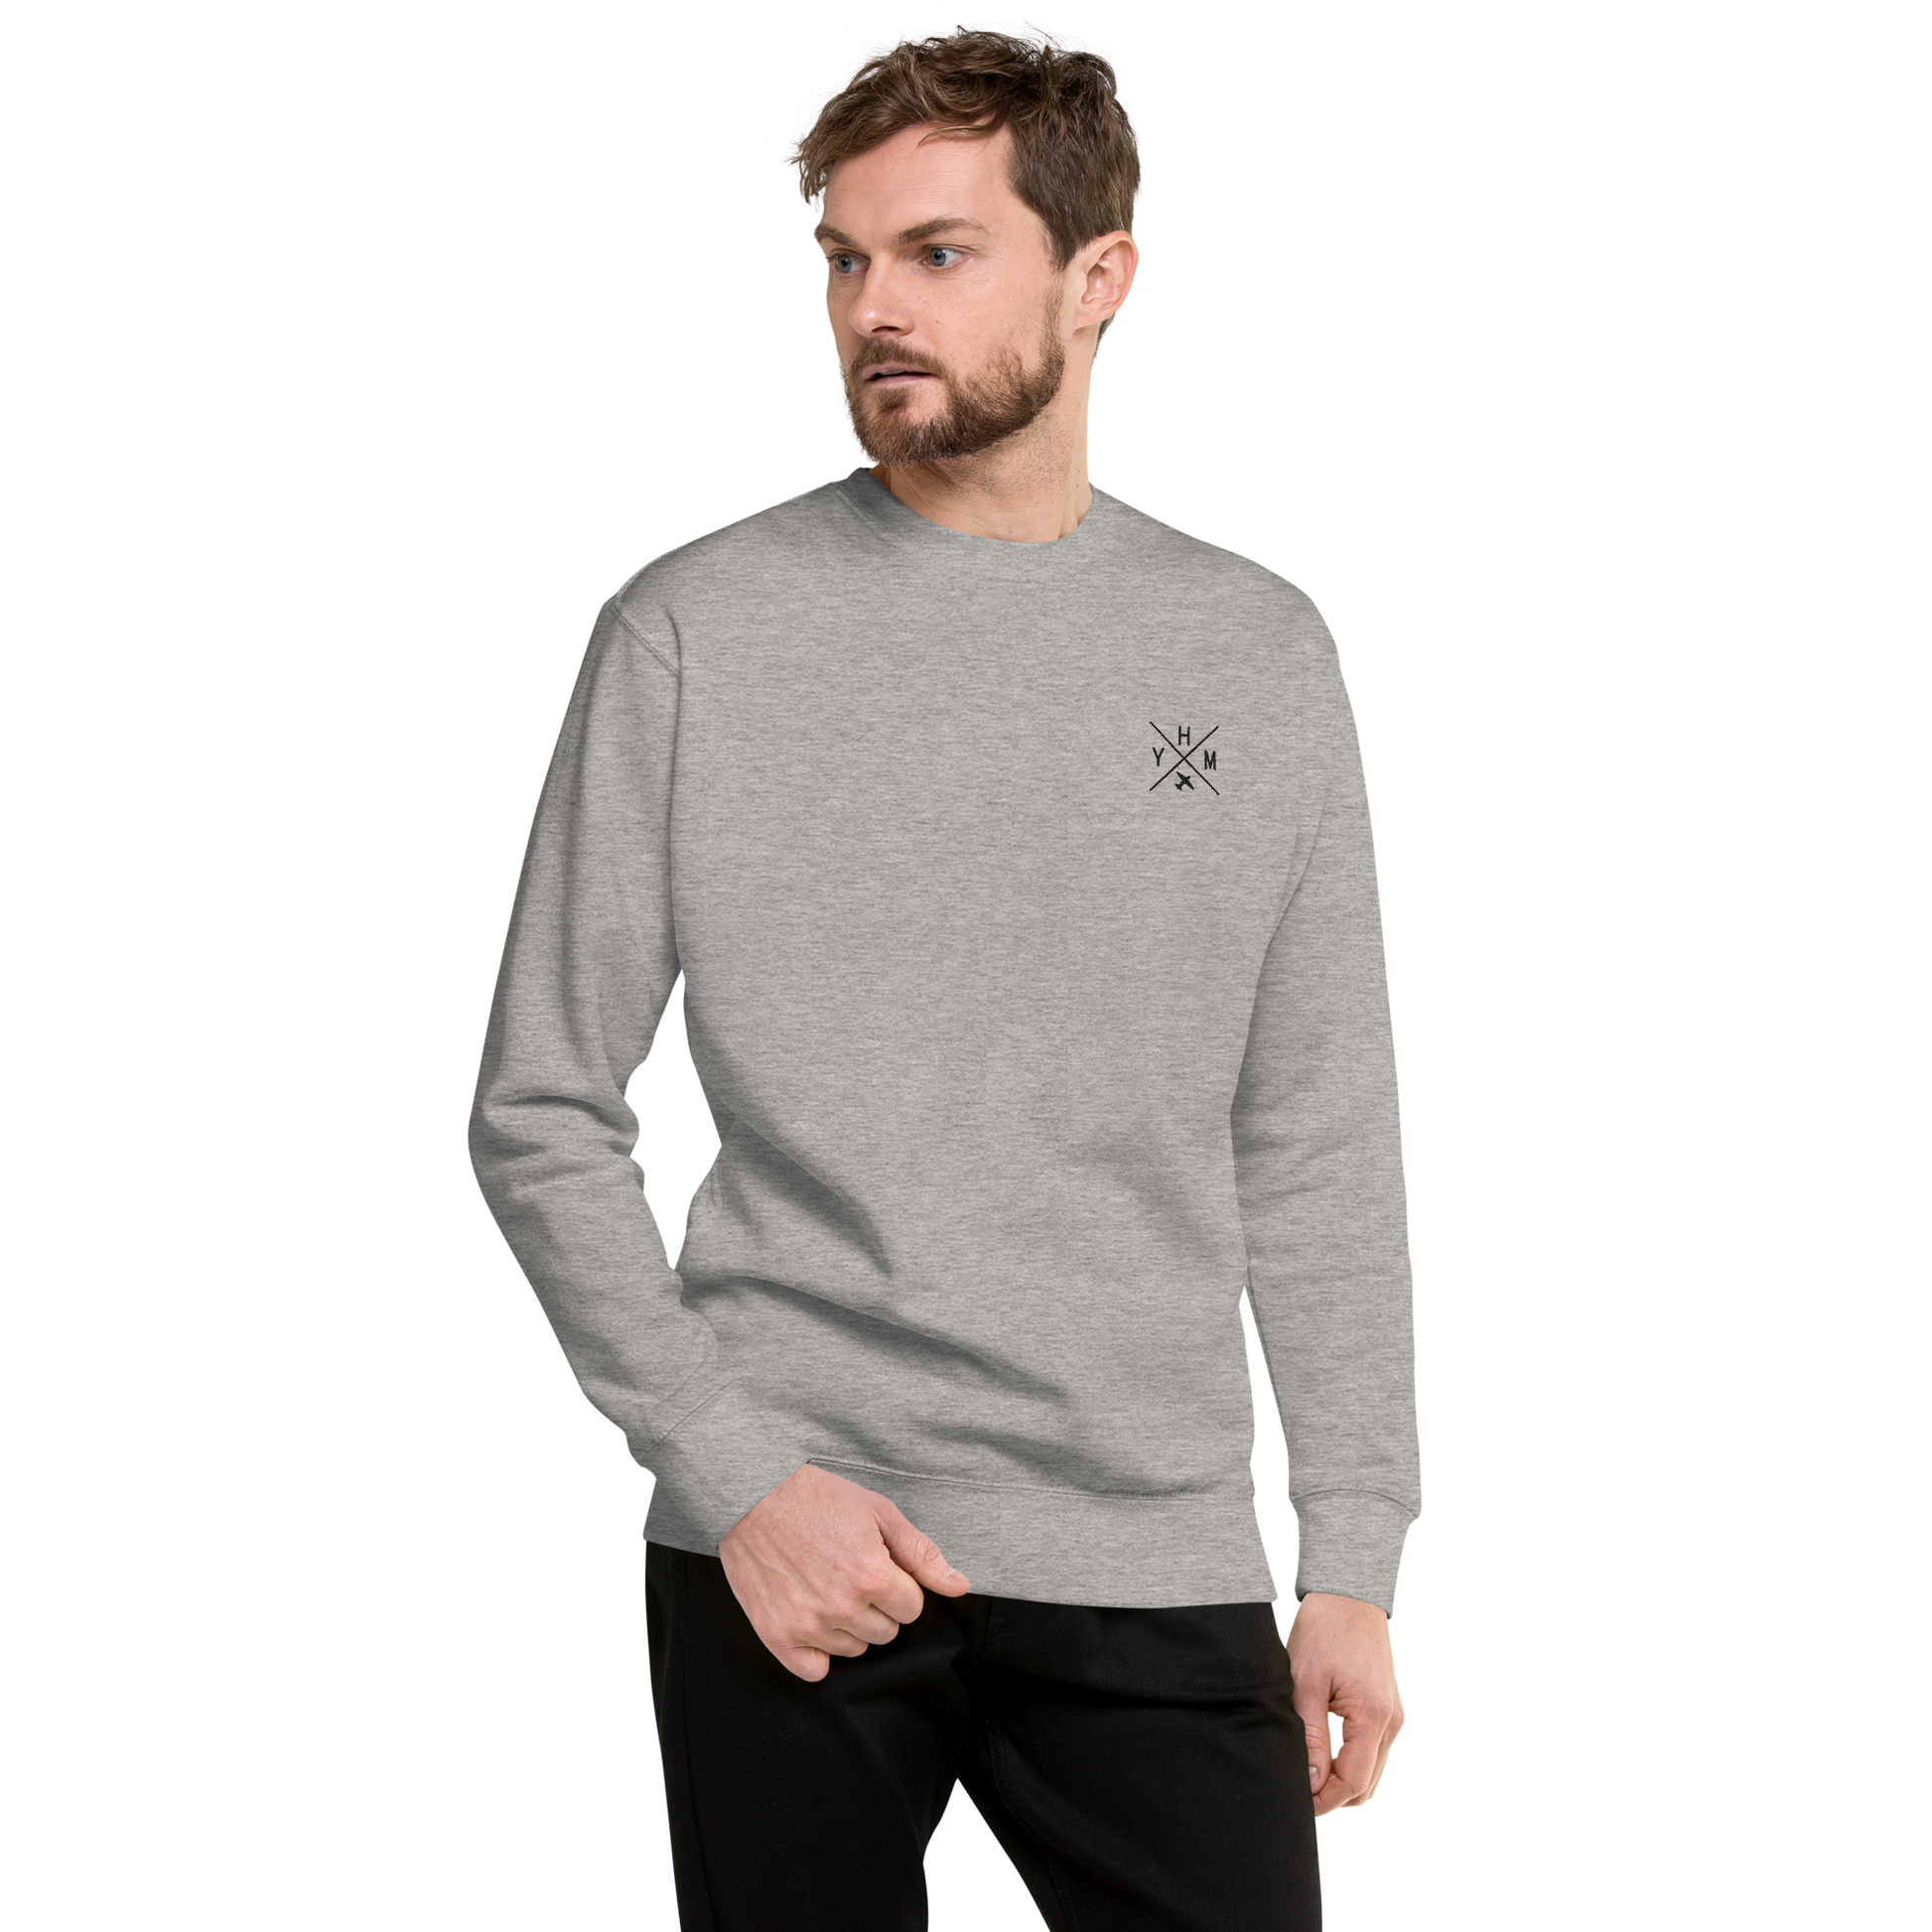 Crossed-X Premium Sweatshirt • YHM Hamilton • YHM Designs - Image 01